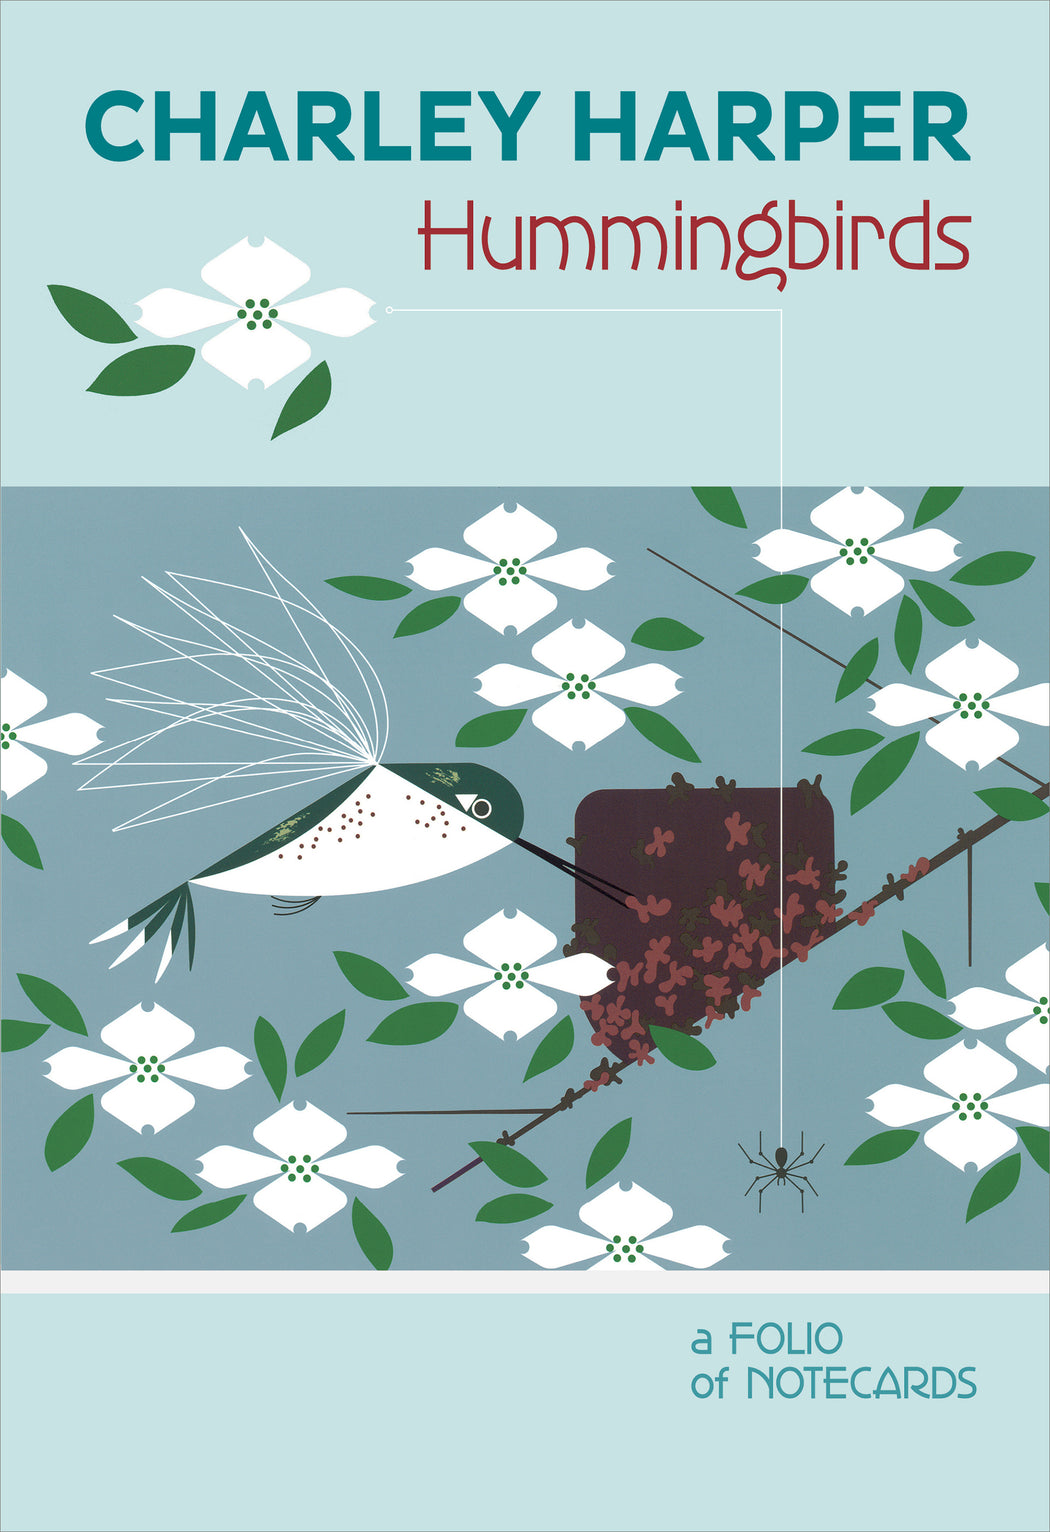 Charley Harper: Hummingbirds Notecard Folio_Front_Flat